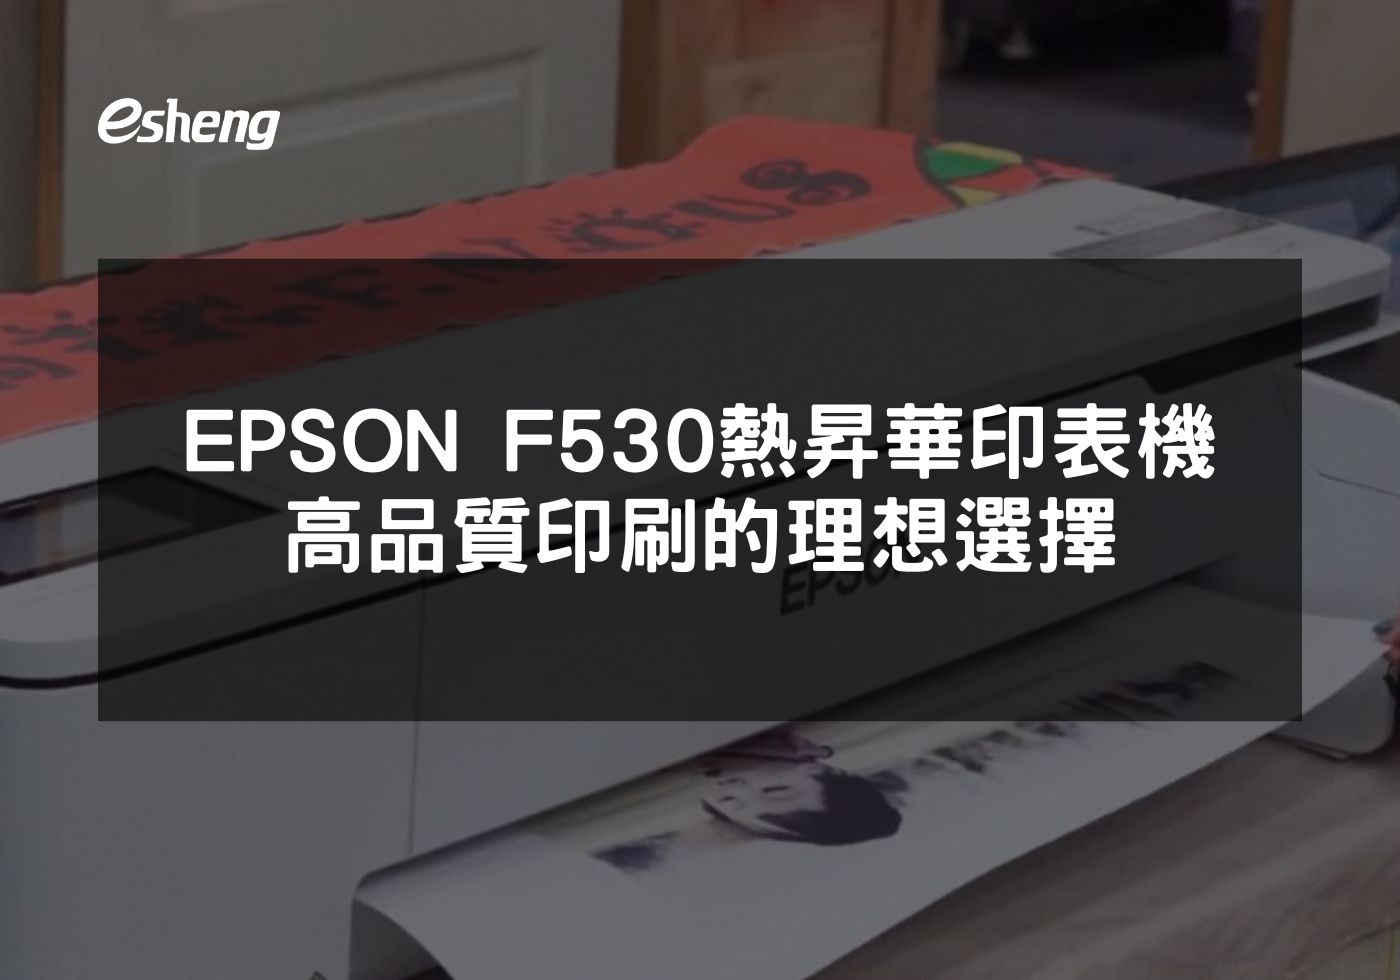 EPSON F530 熱昇華印表機 高品質印刷的理想選擇